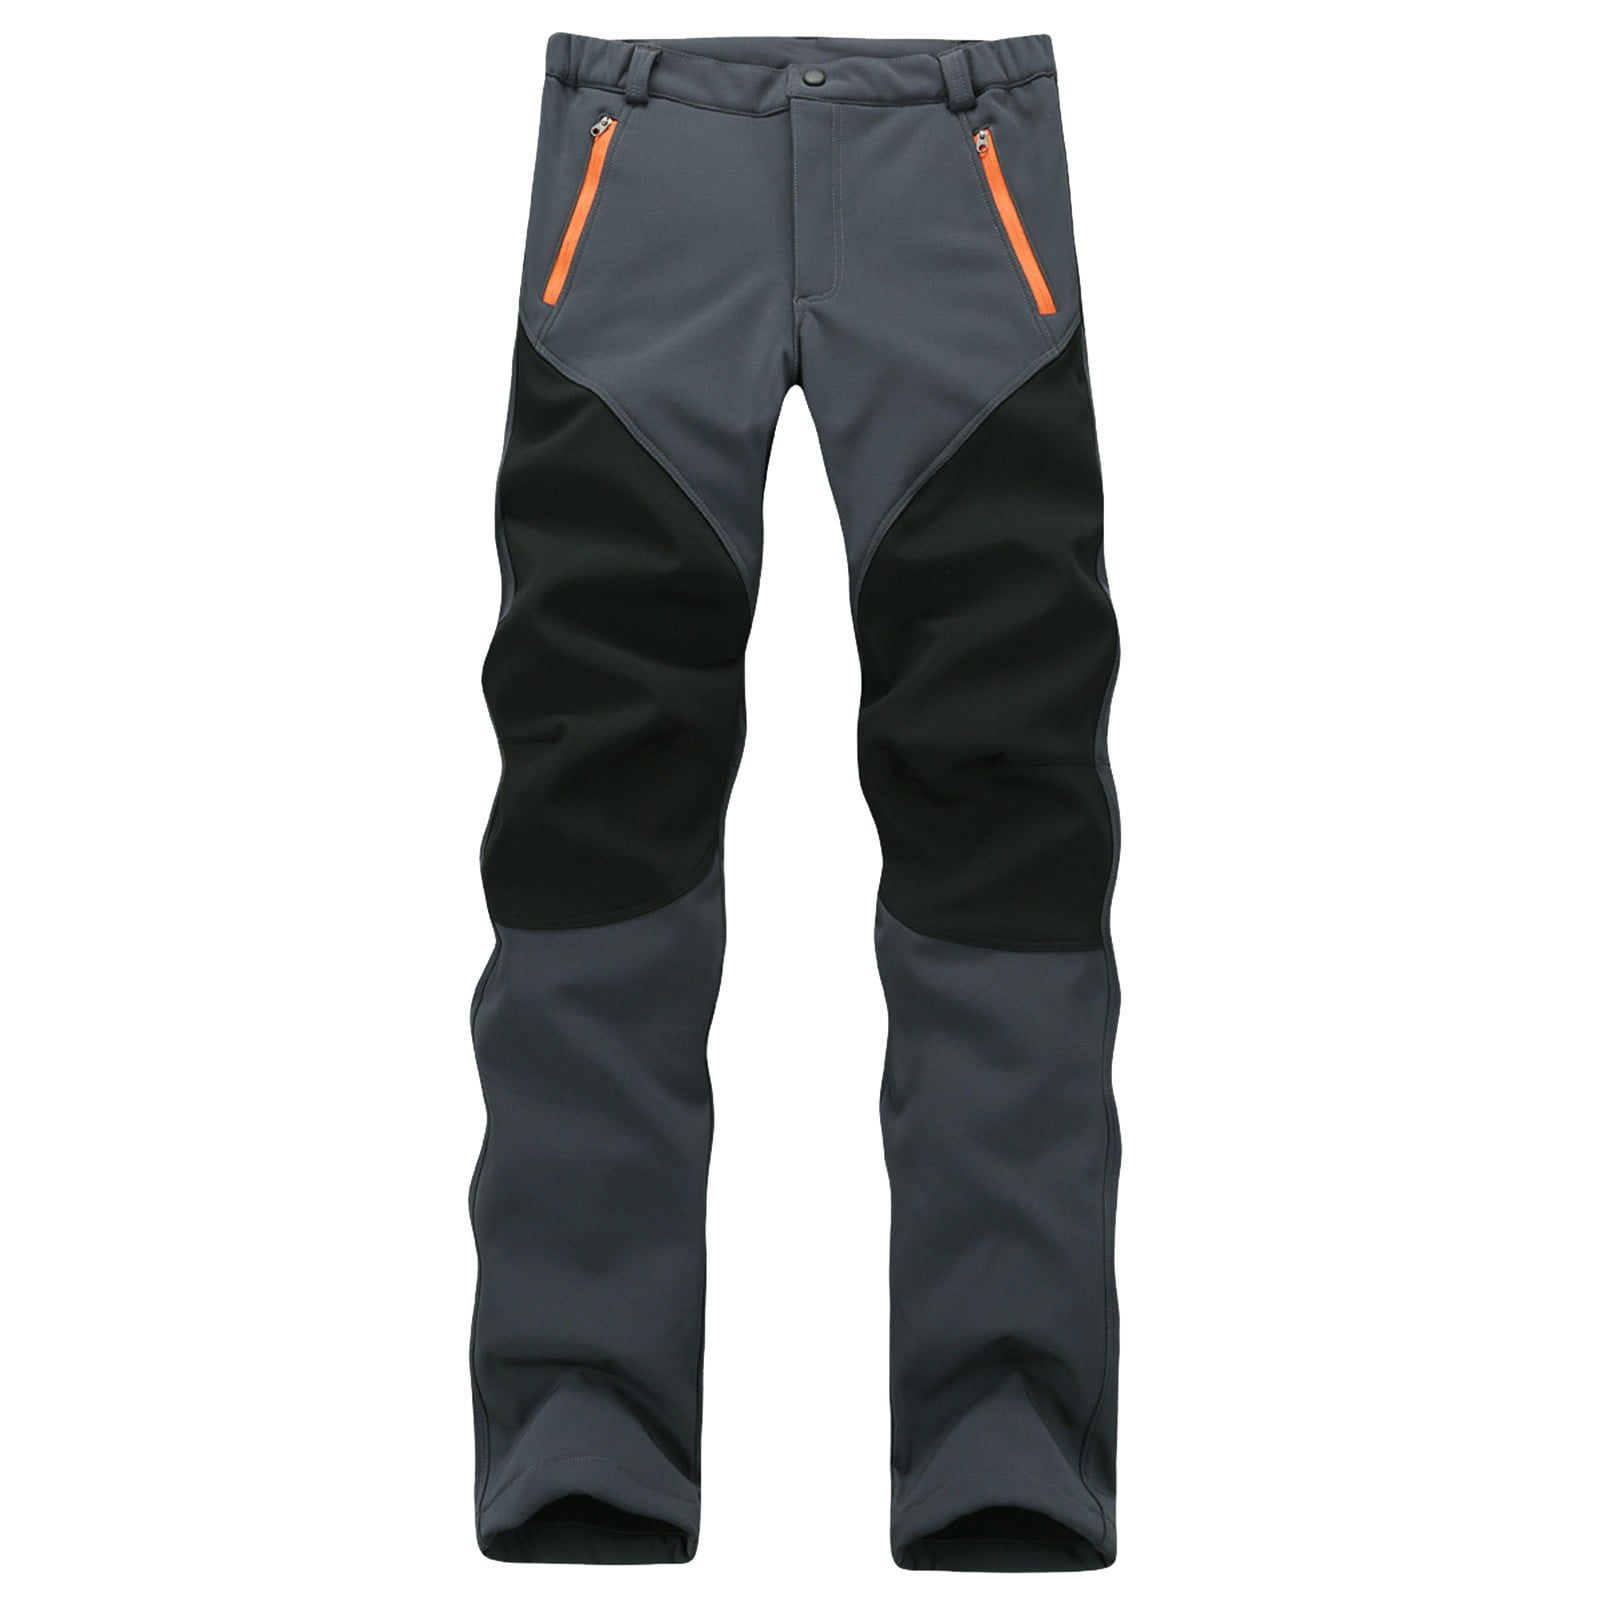 AdBFJAF Khaki Cargo Pants for Men Slim Fit Mens Autumn and Winter ...